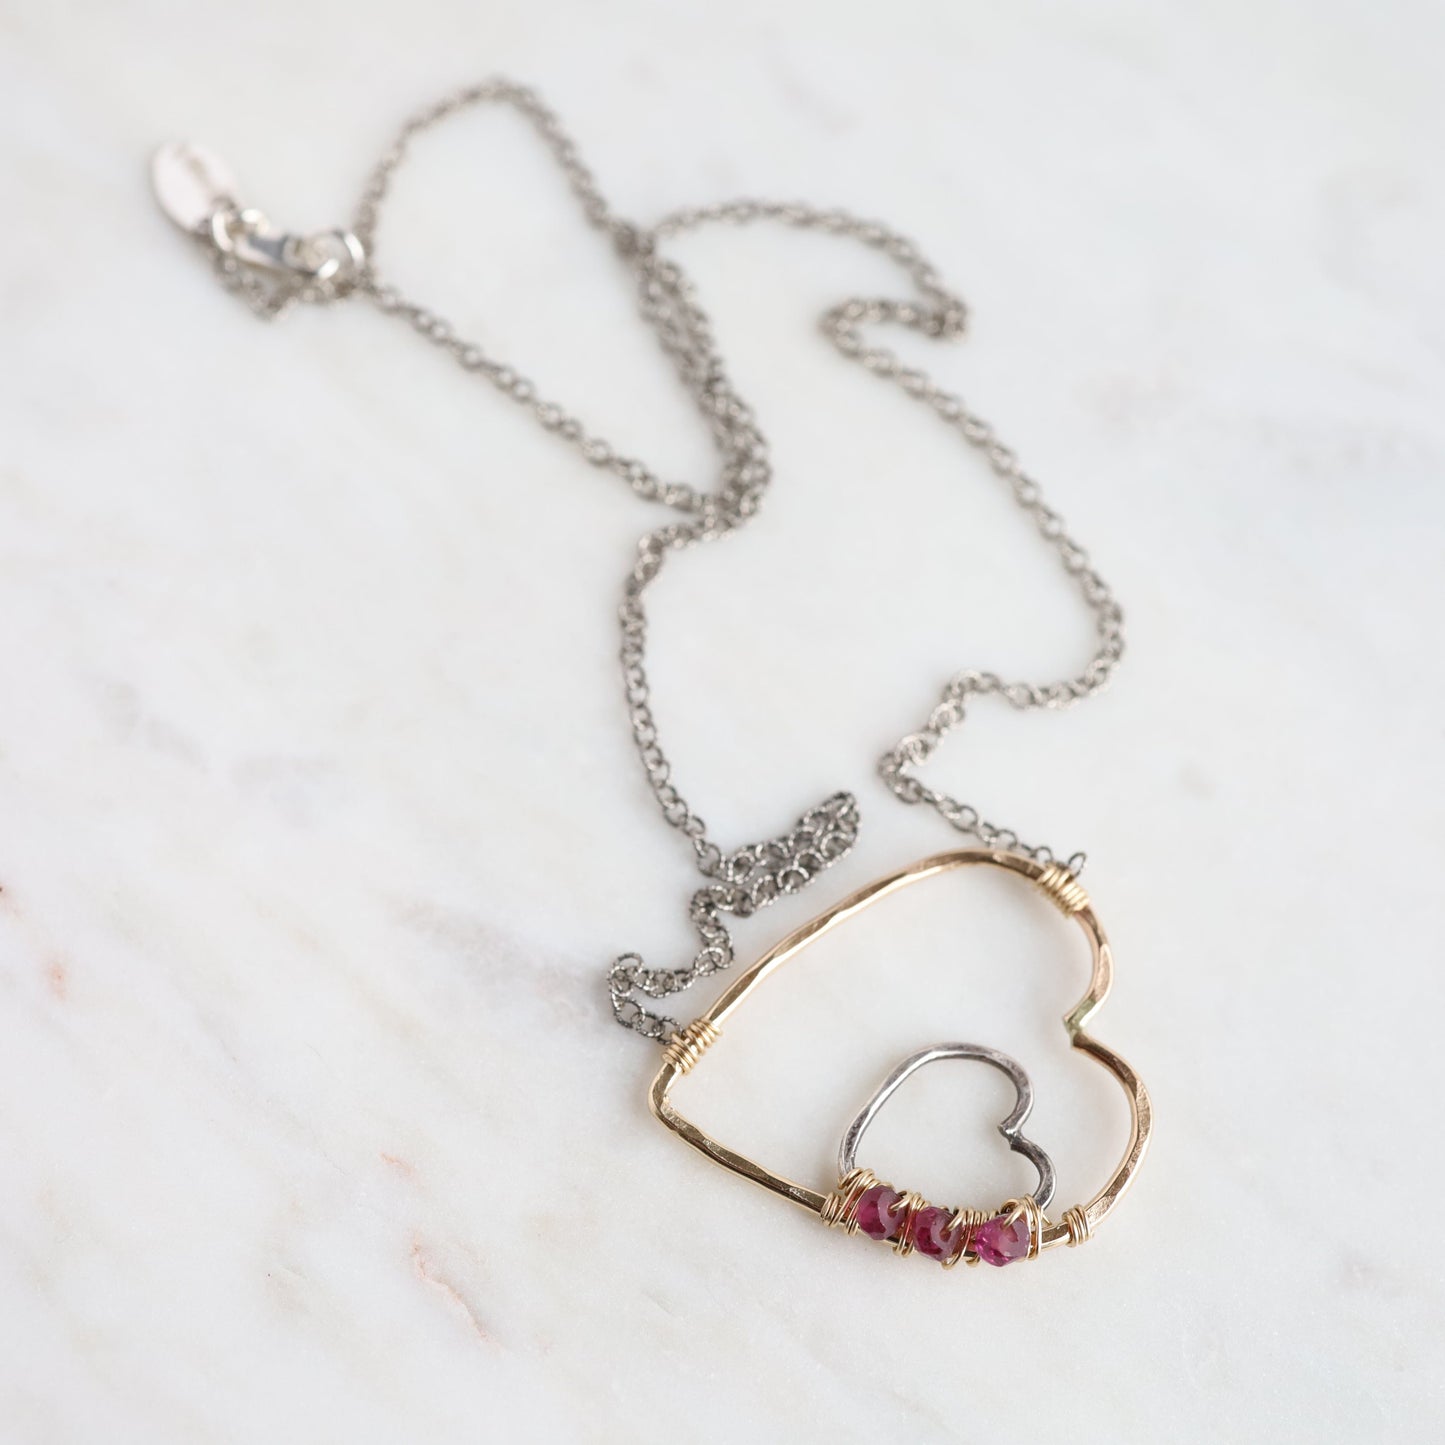 NKL-GF Gold & Silver Heart with Rhodolite Garnet Necklace